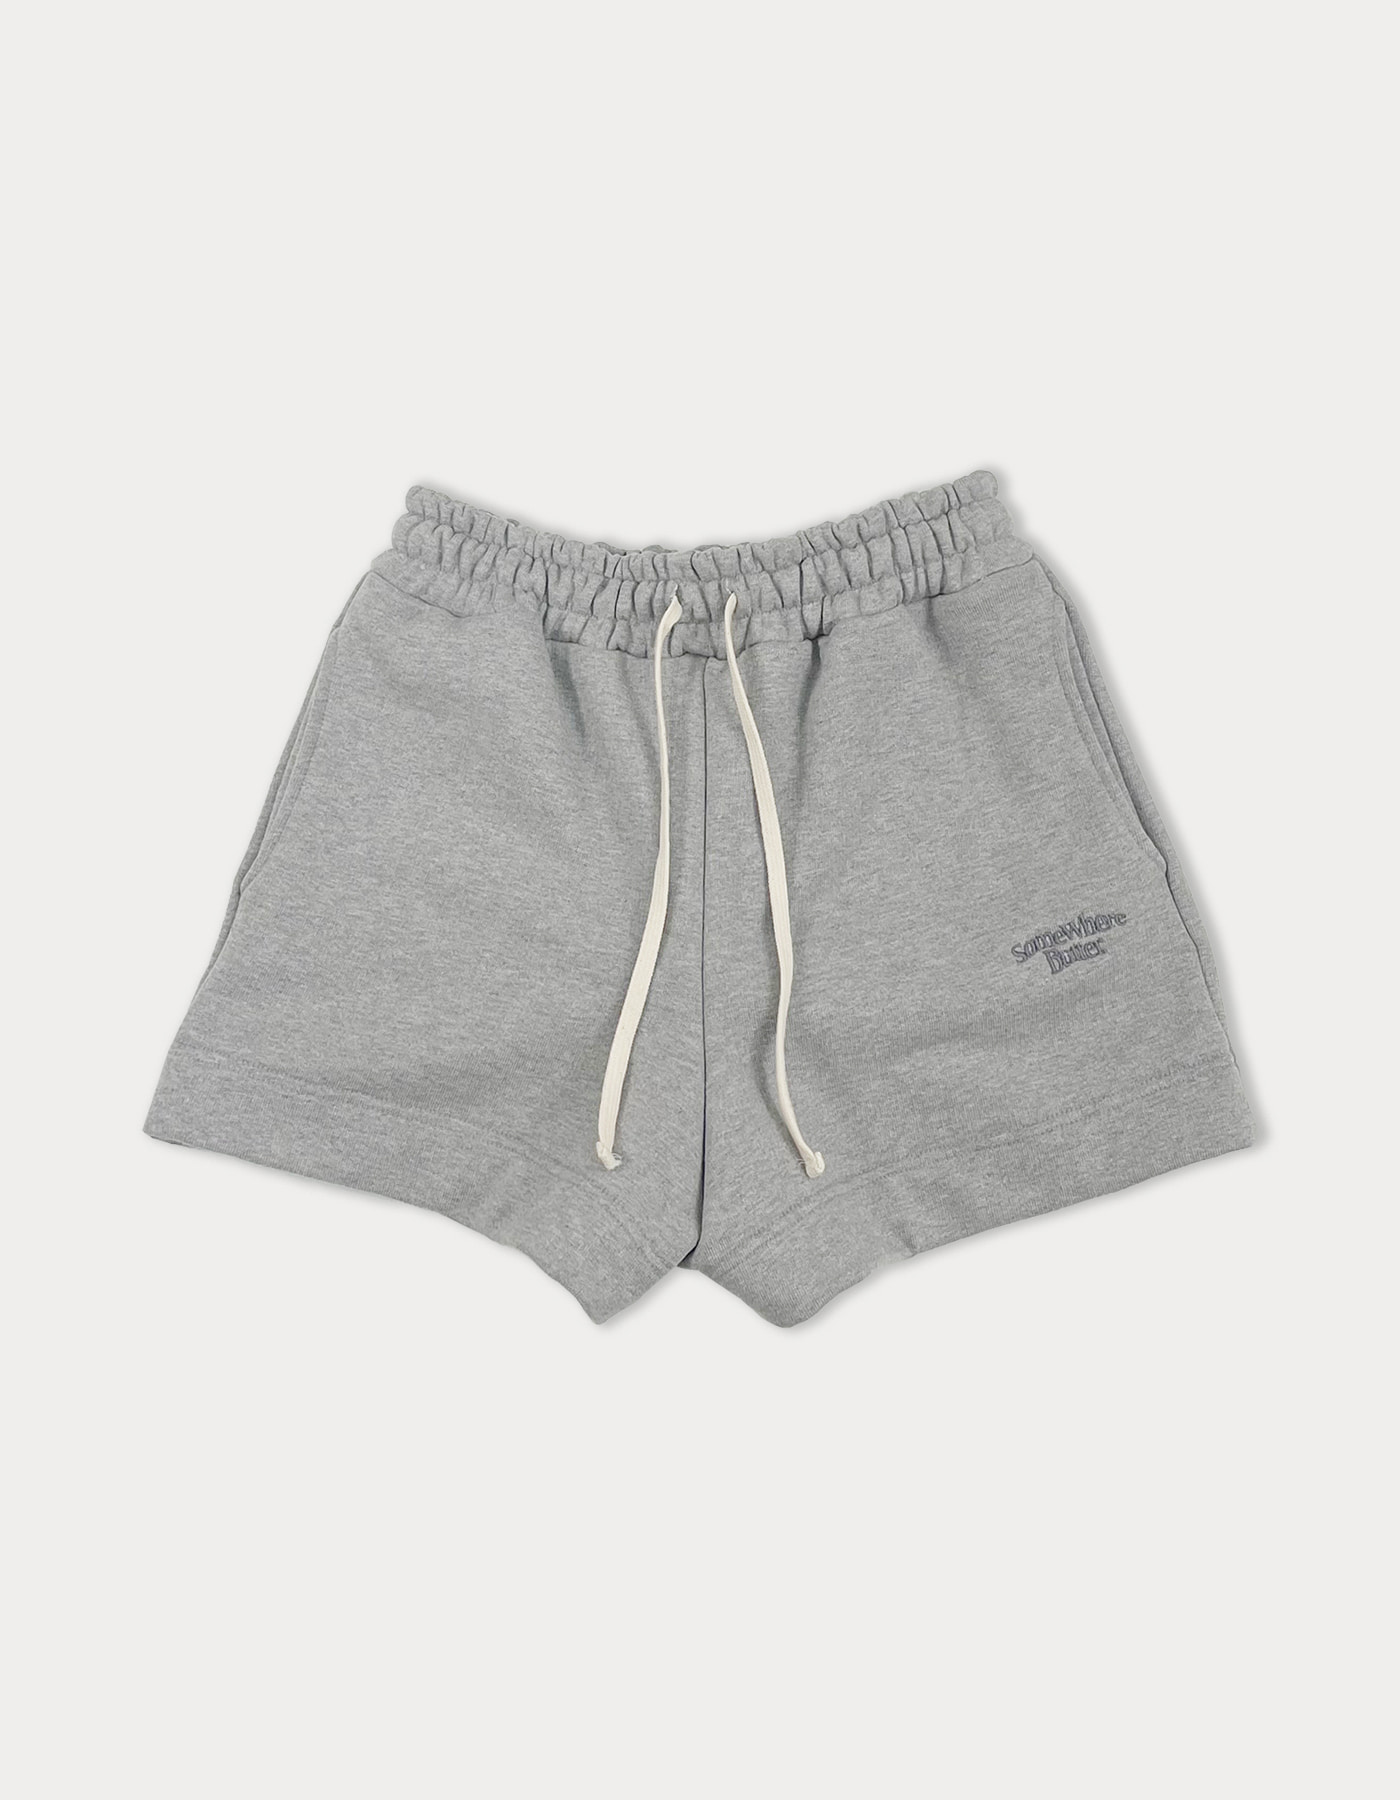 (easy line)wave symbol shorts - grey